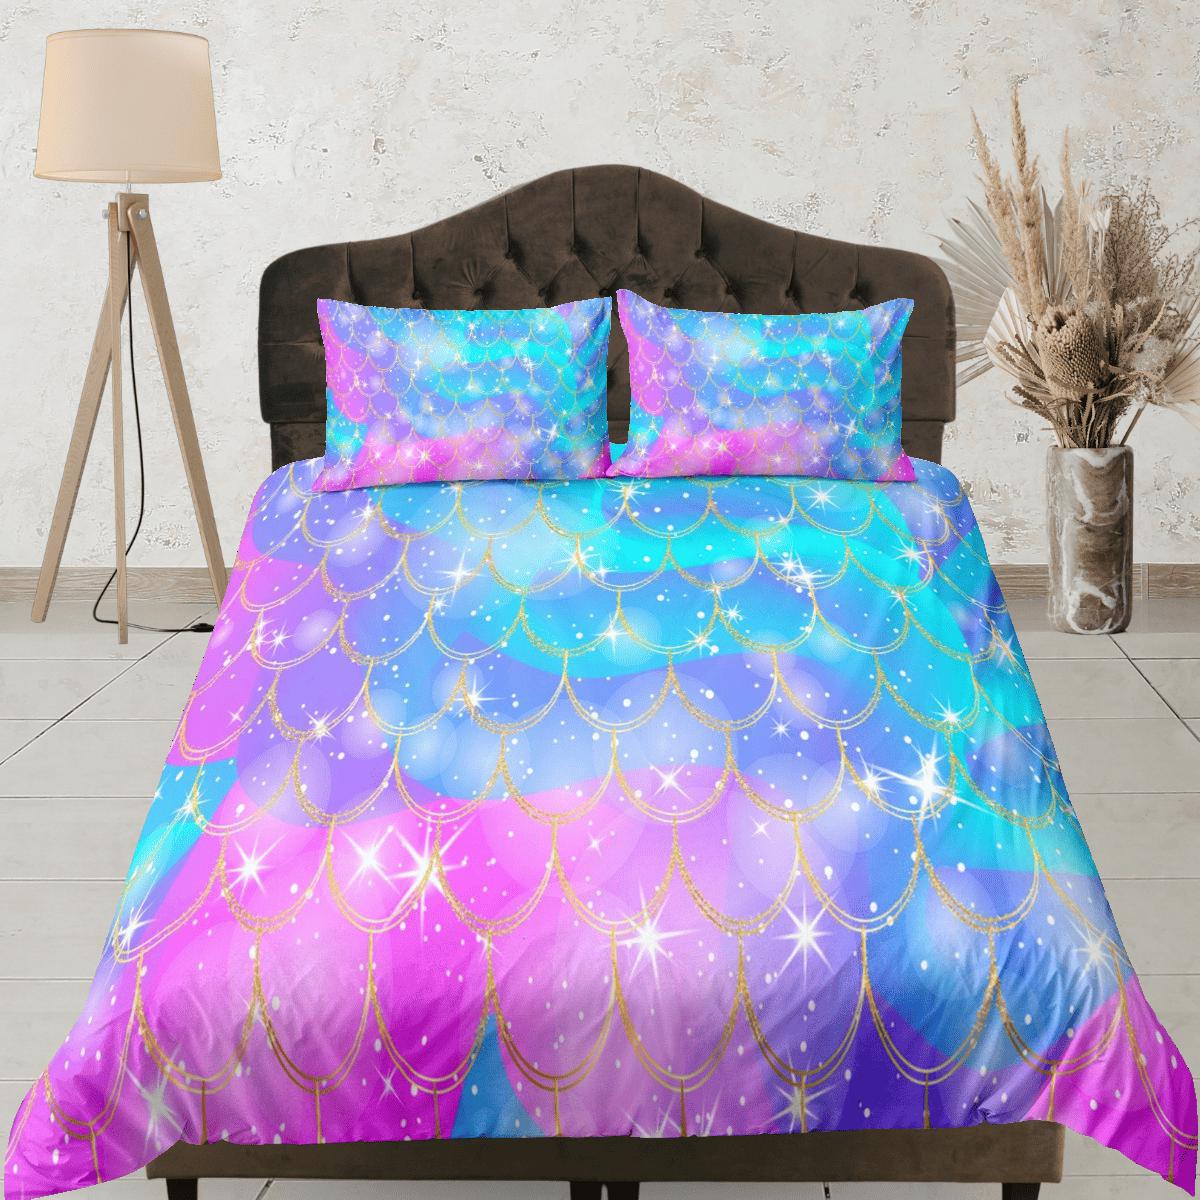 daintyduvet Mermaid Tail Duvet Cover Set, Pastel Rainbow Bedspread Dorm Bedding Set, Comforter Cover Twin, Kids Bedding